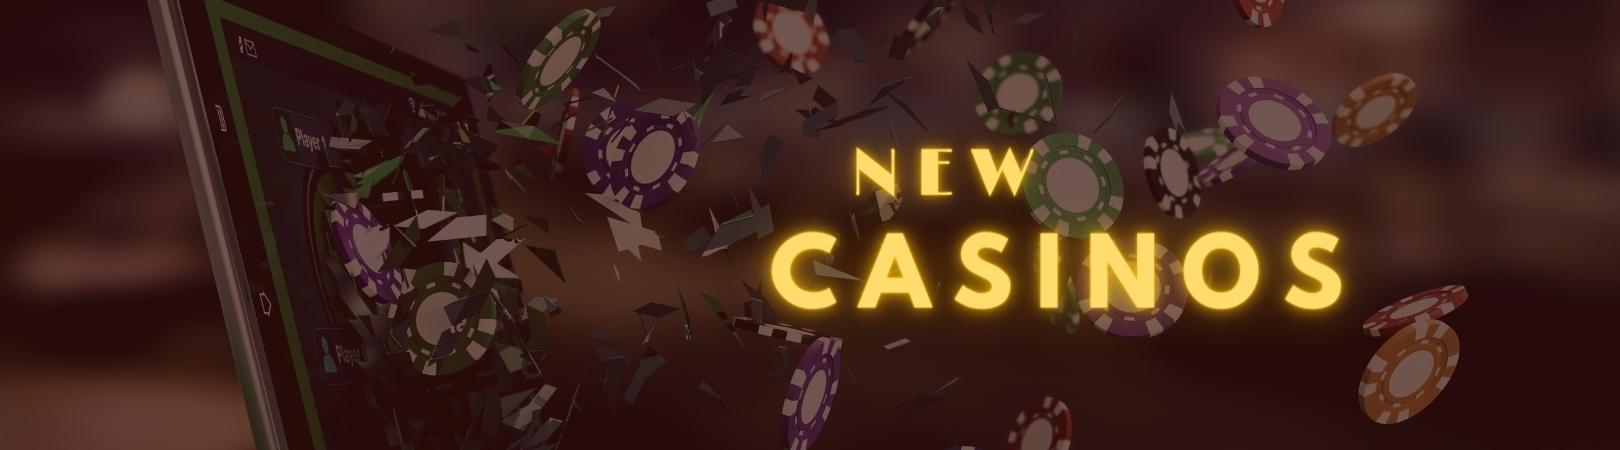 new casinos img